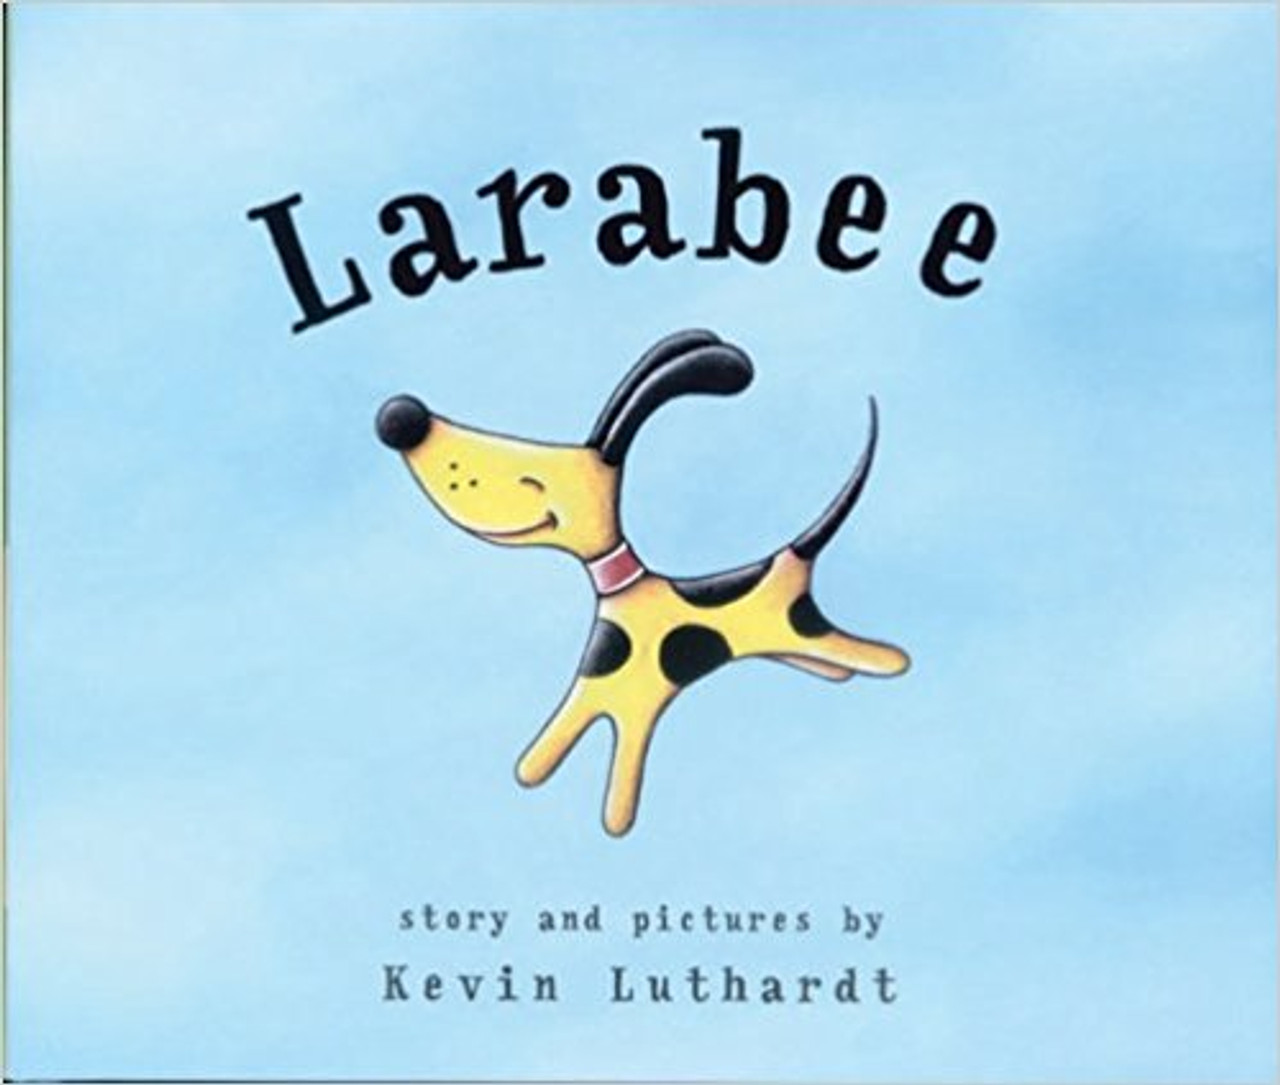 Larabee by Kevin Luthardt